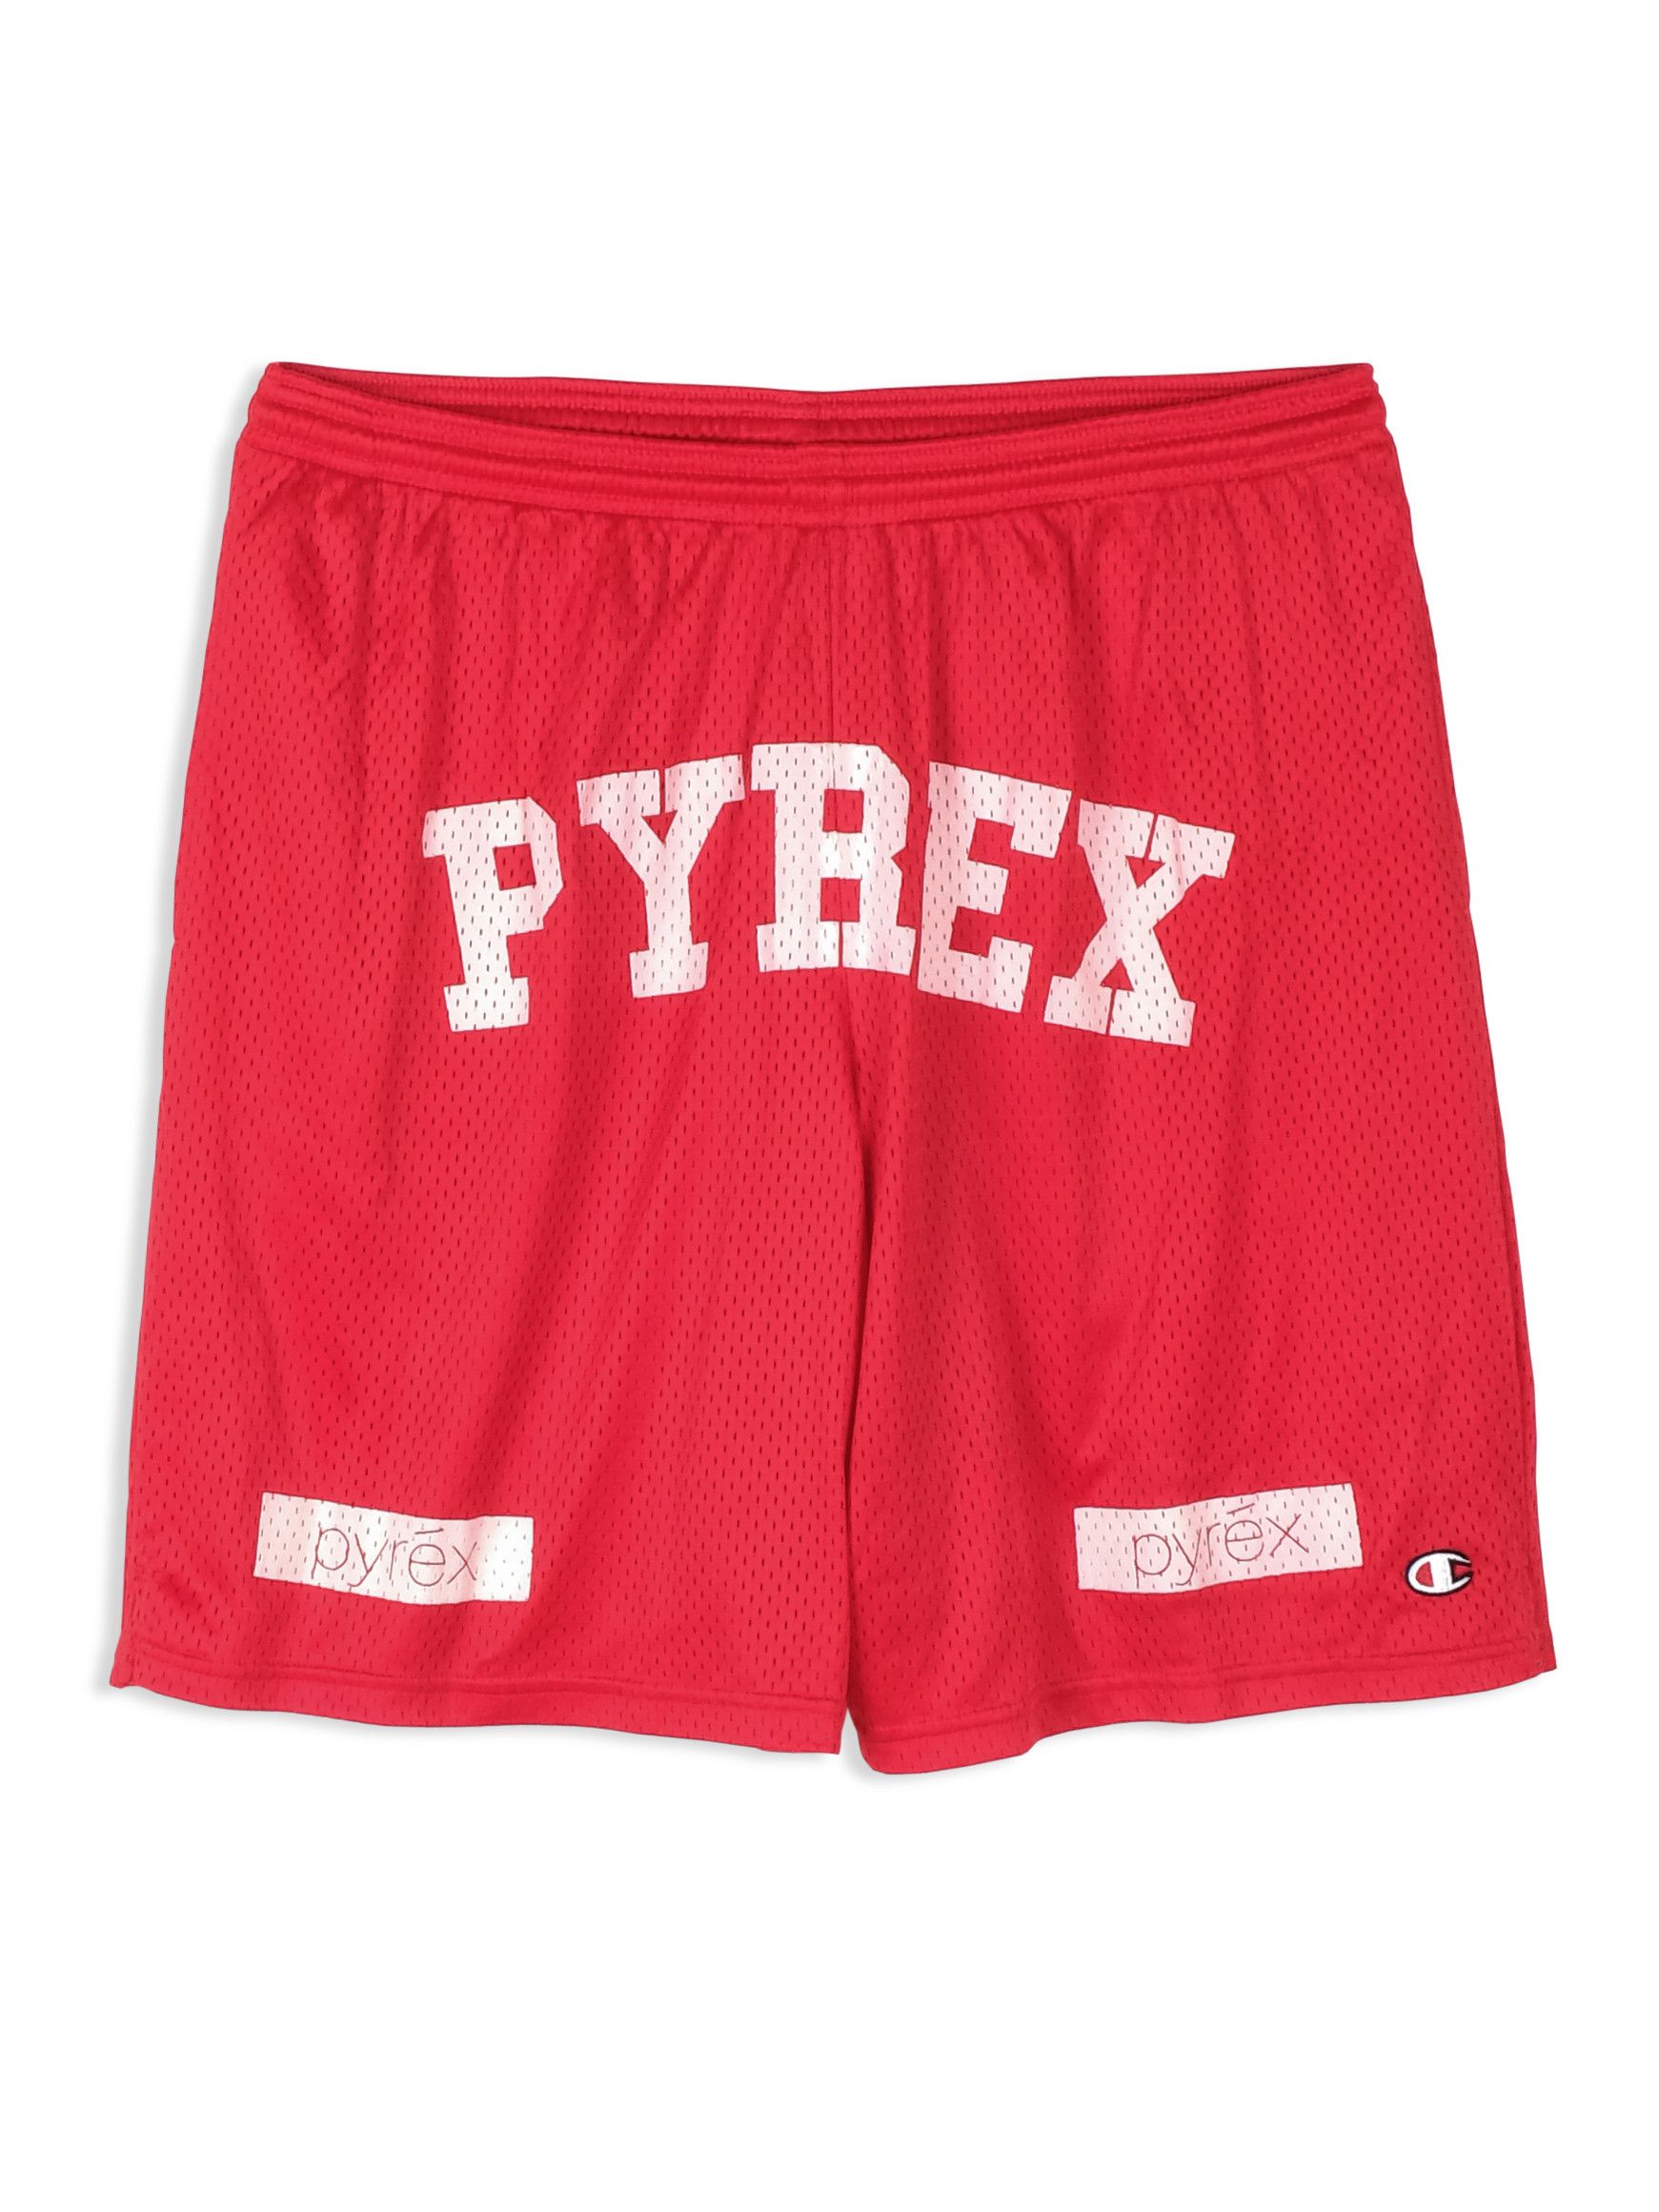 Pyrex Vision Champion Basketball Shorts Size US 40 / EU 56 - 1 Preview